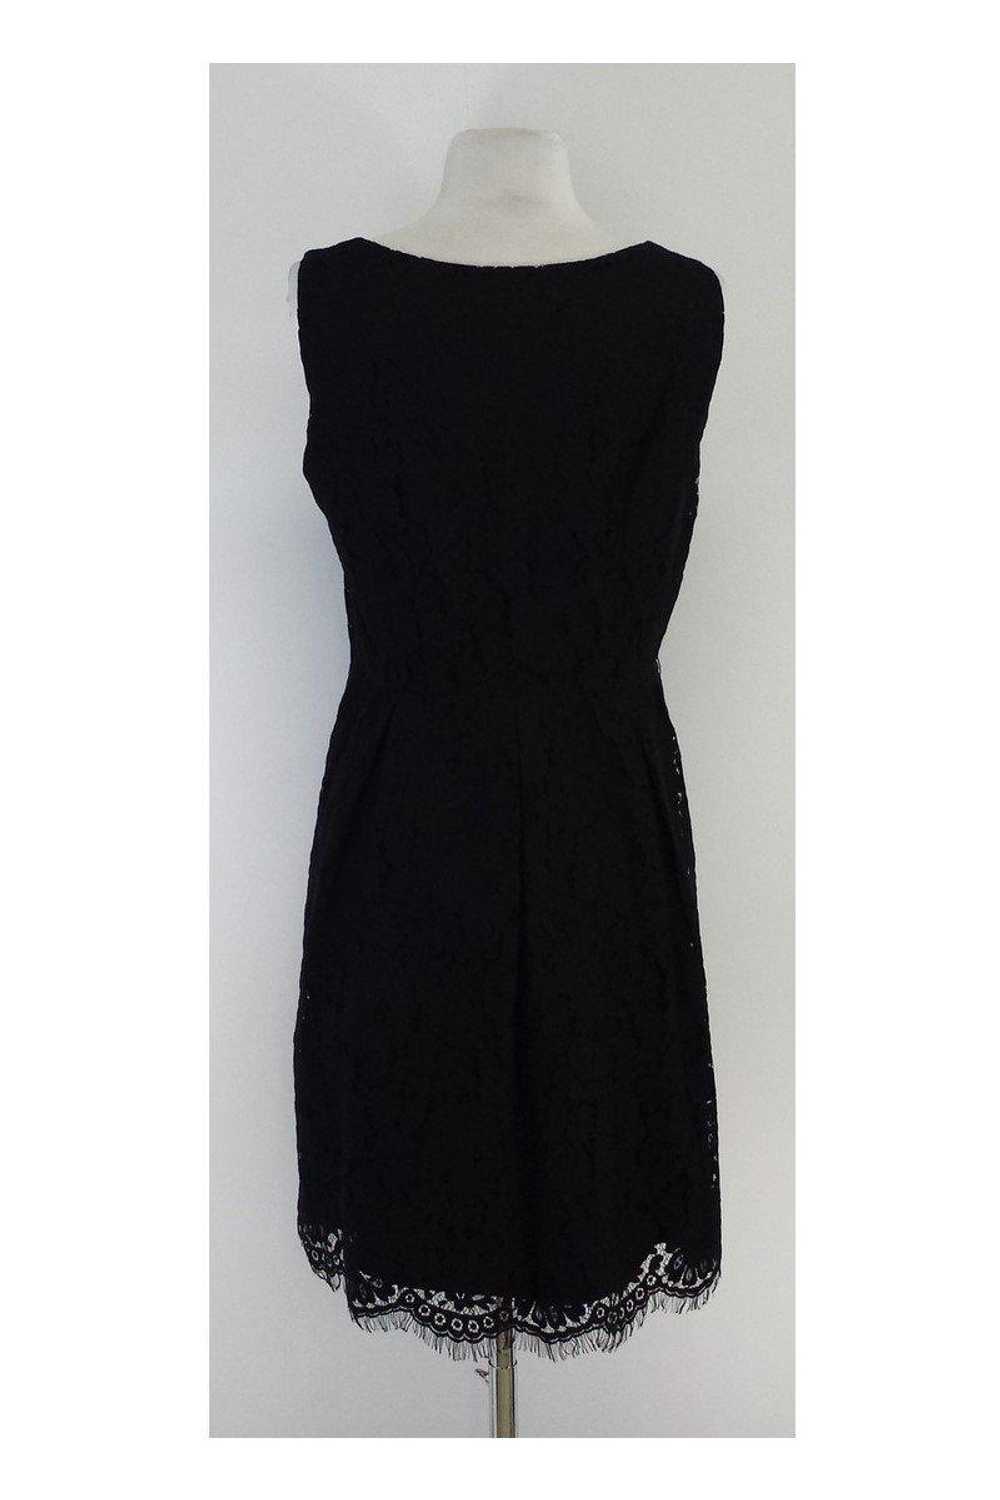 Gerard Darel - Black Lace Sleeveless Dress Sz 8 - image 3